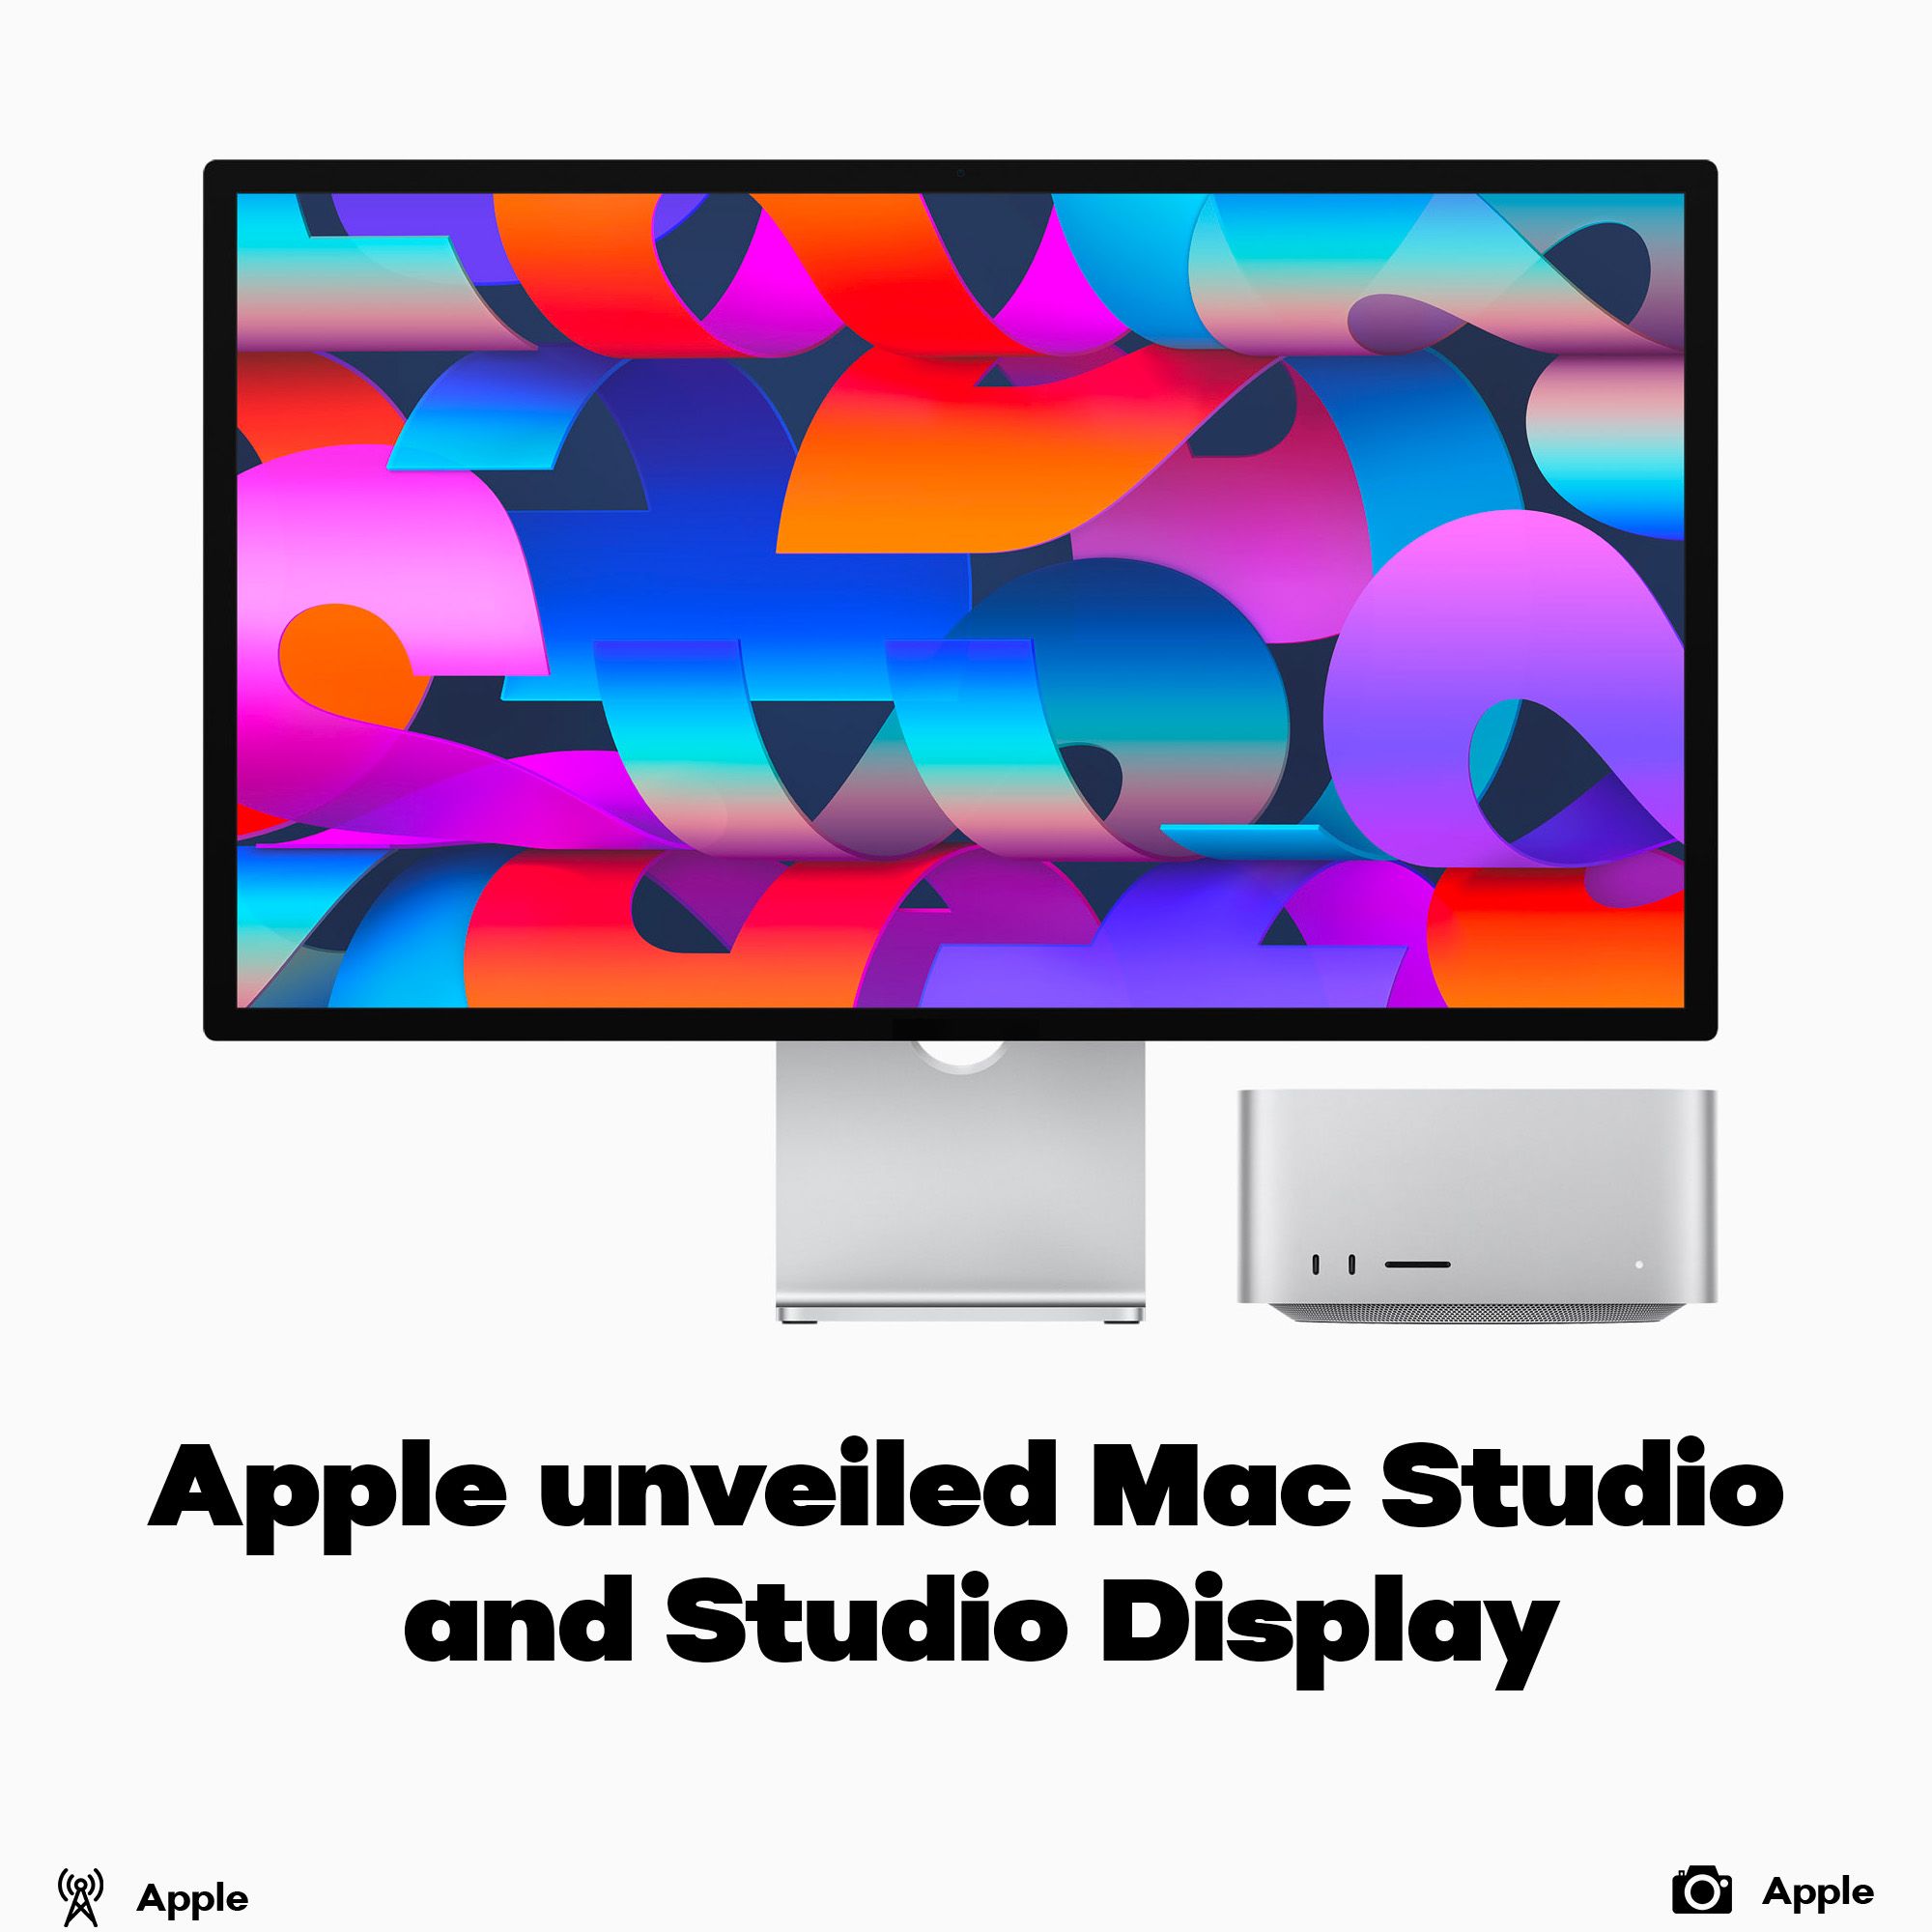 Apple unveiled Mac Studio and Studio Display